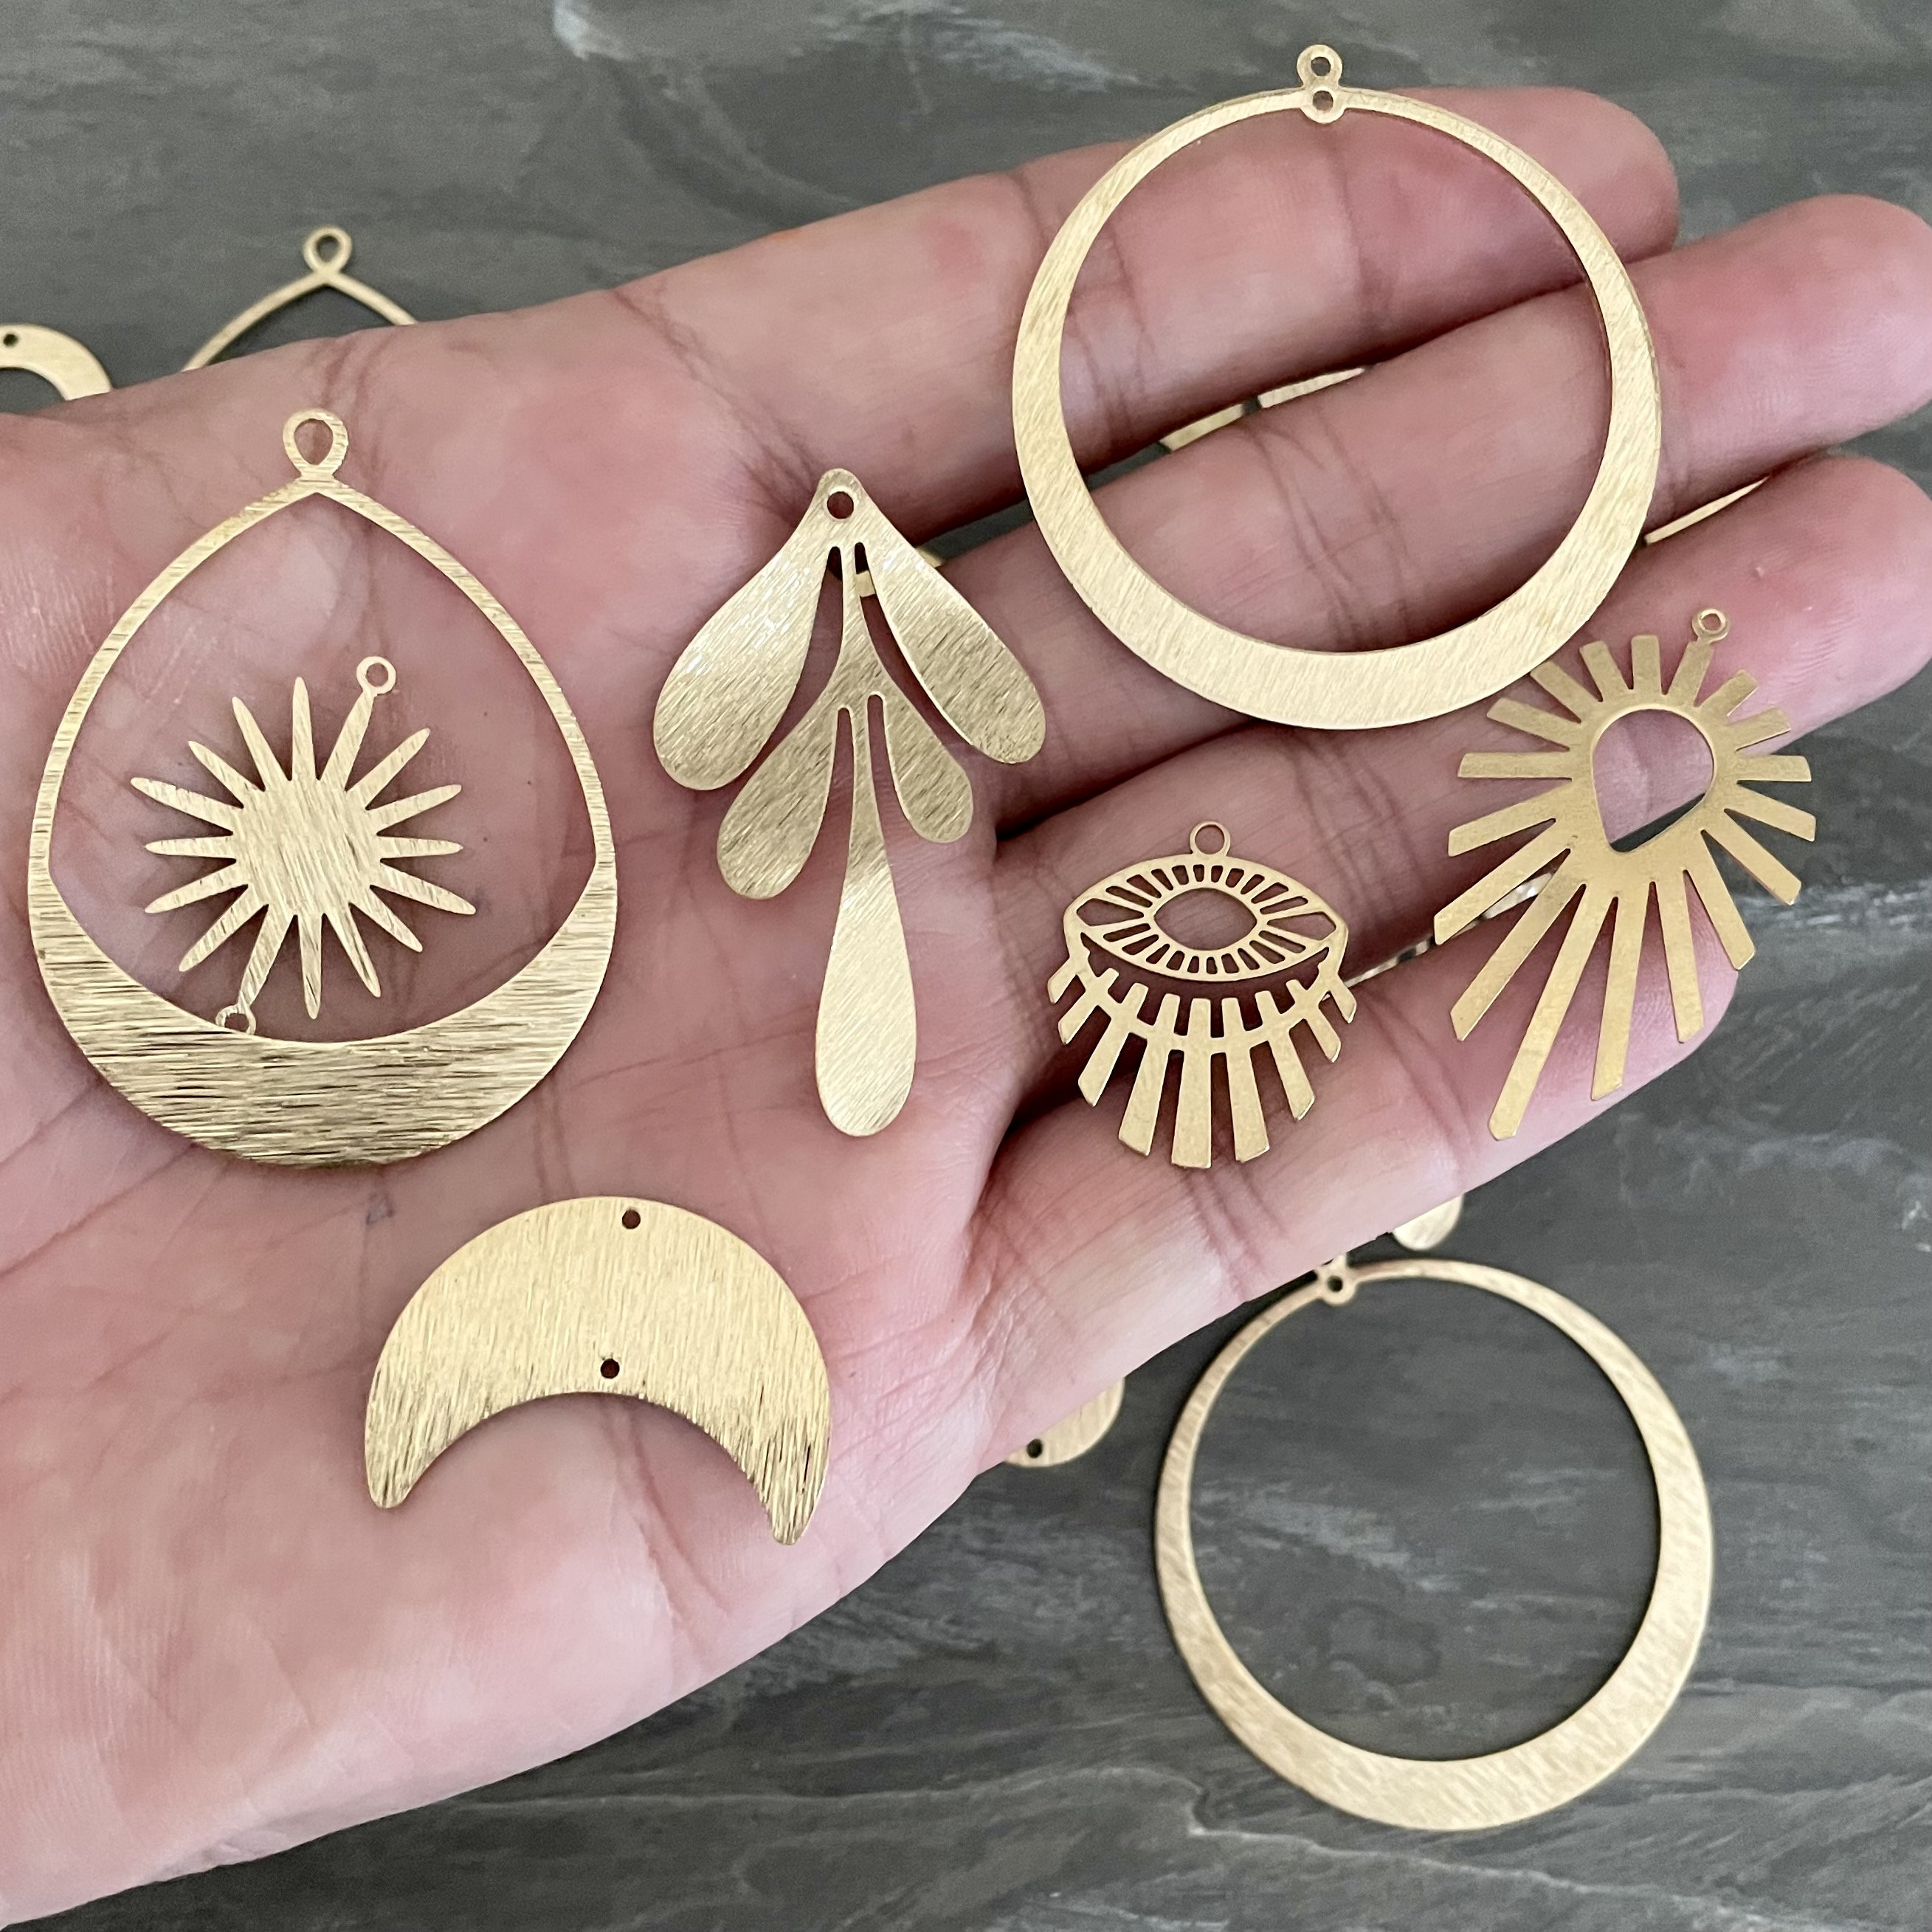 Artisan Boho Earring Charms of Ceramic, Drop Long Earring Findings